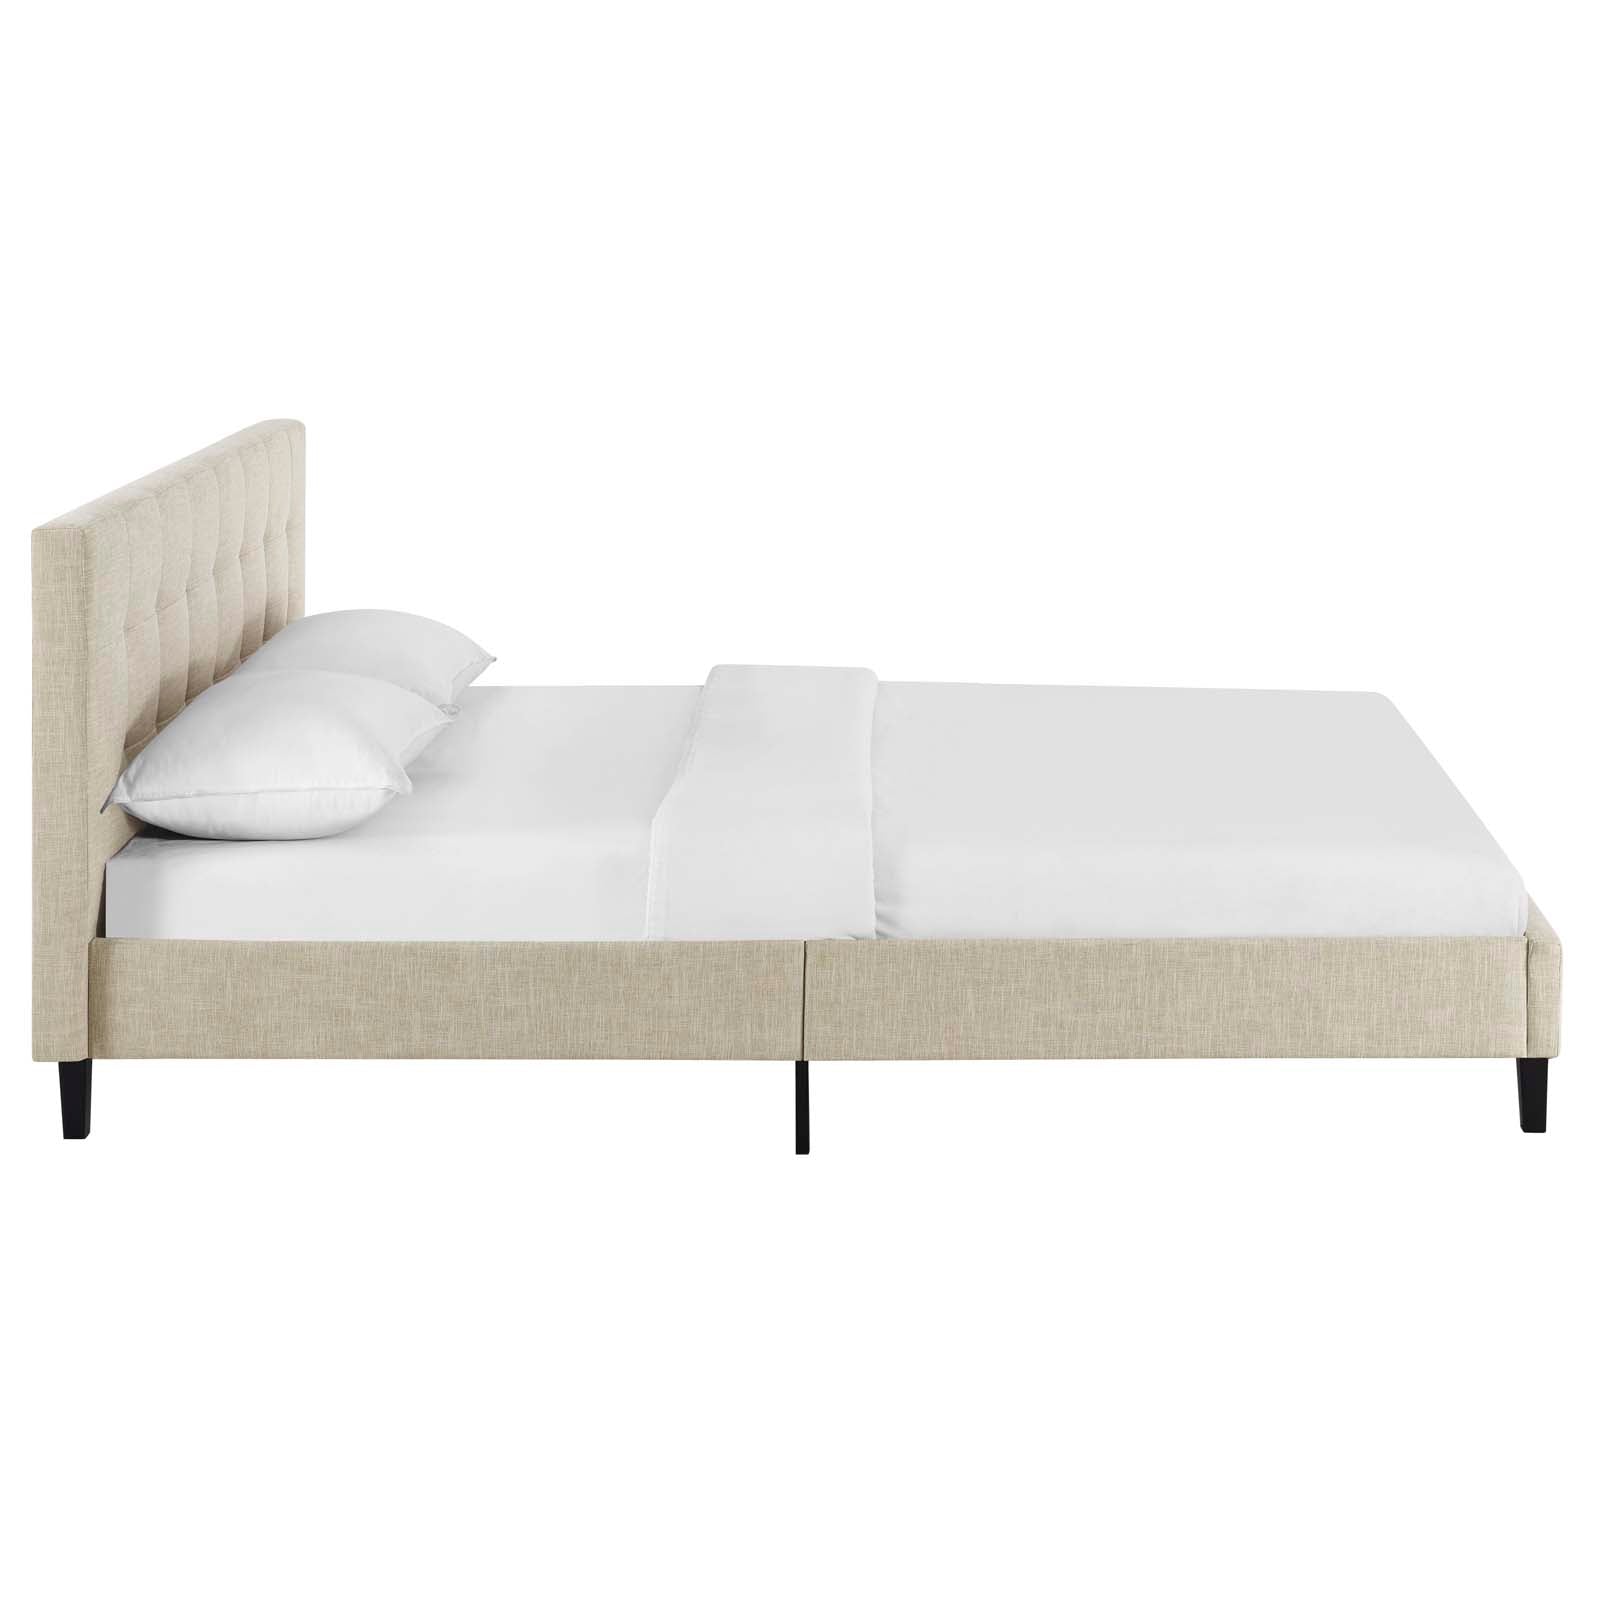 Modway Beds - Linnea Full Bed Beige